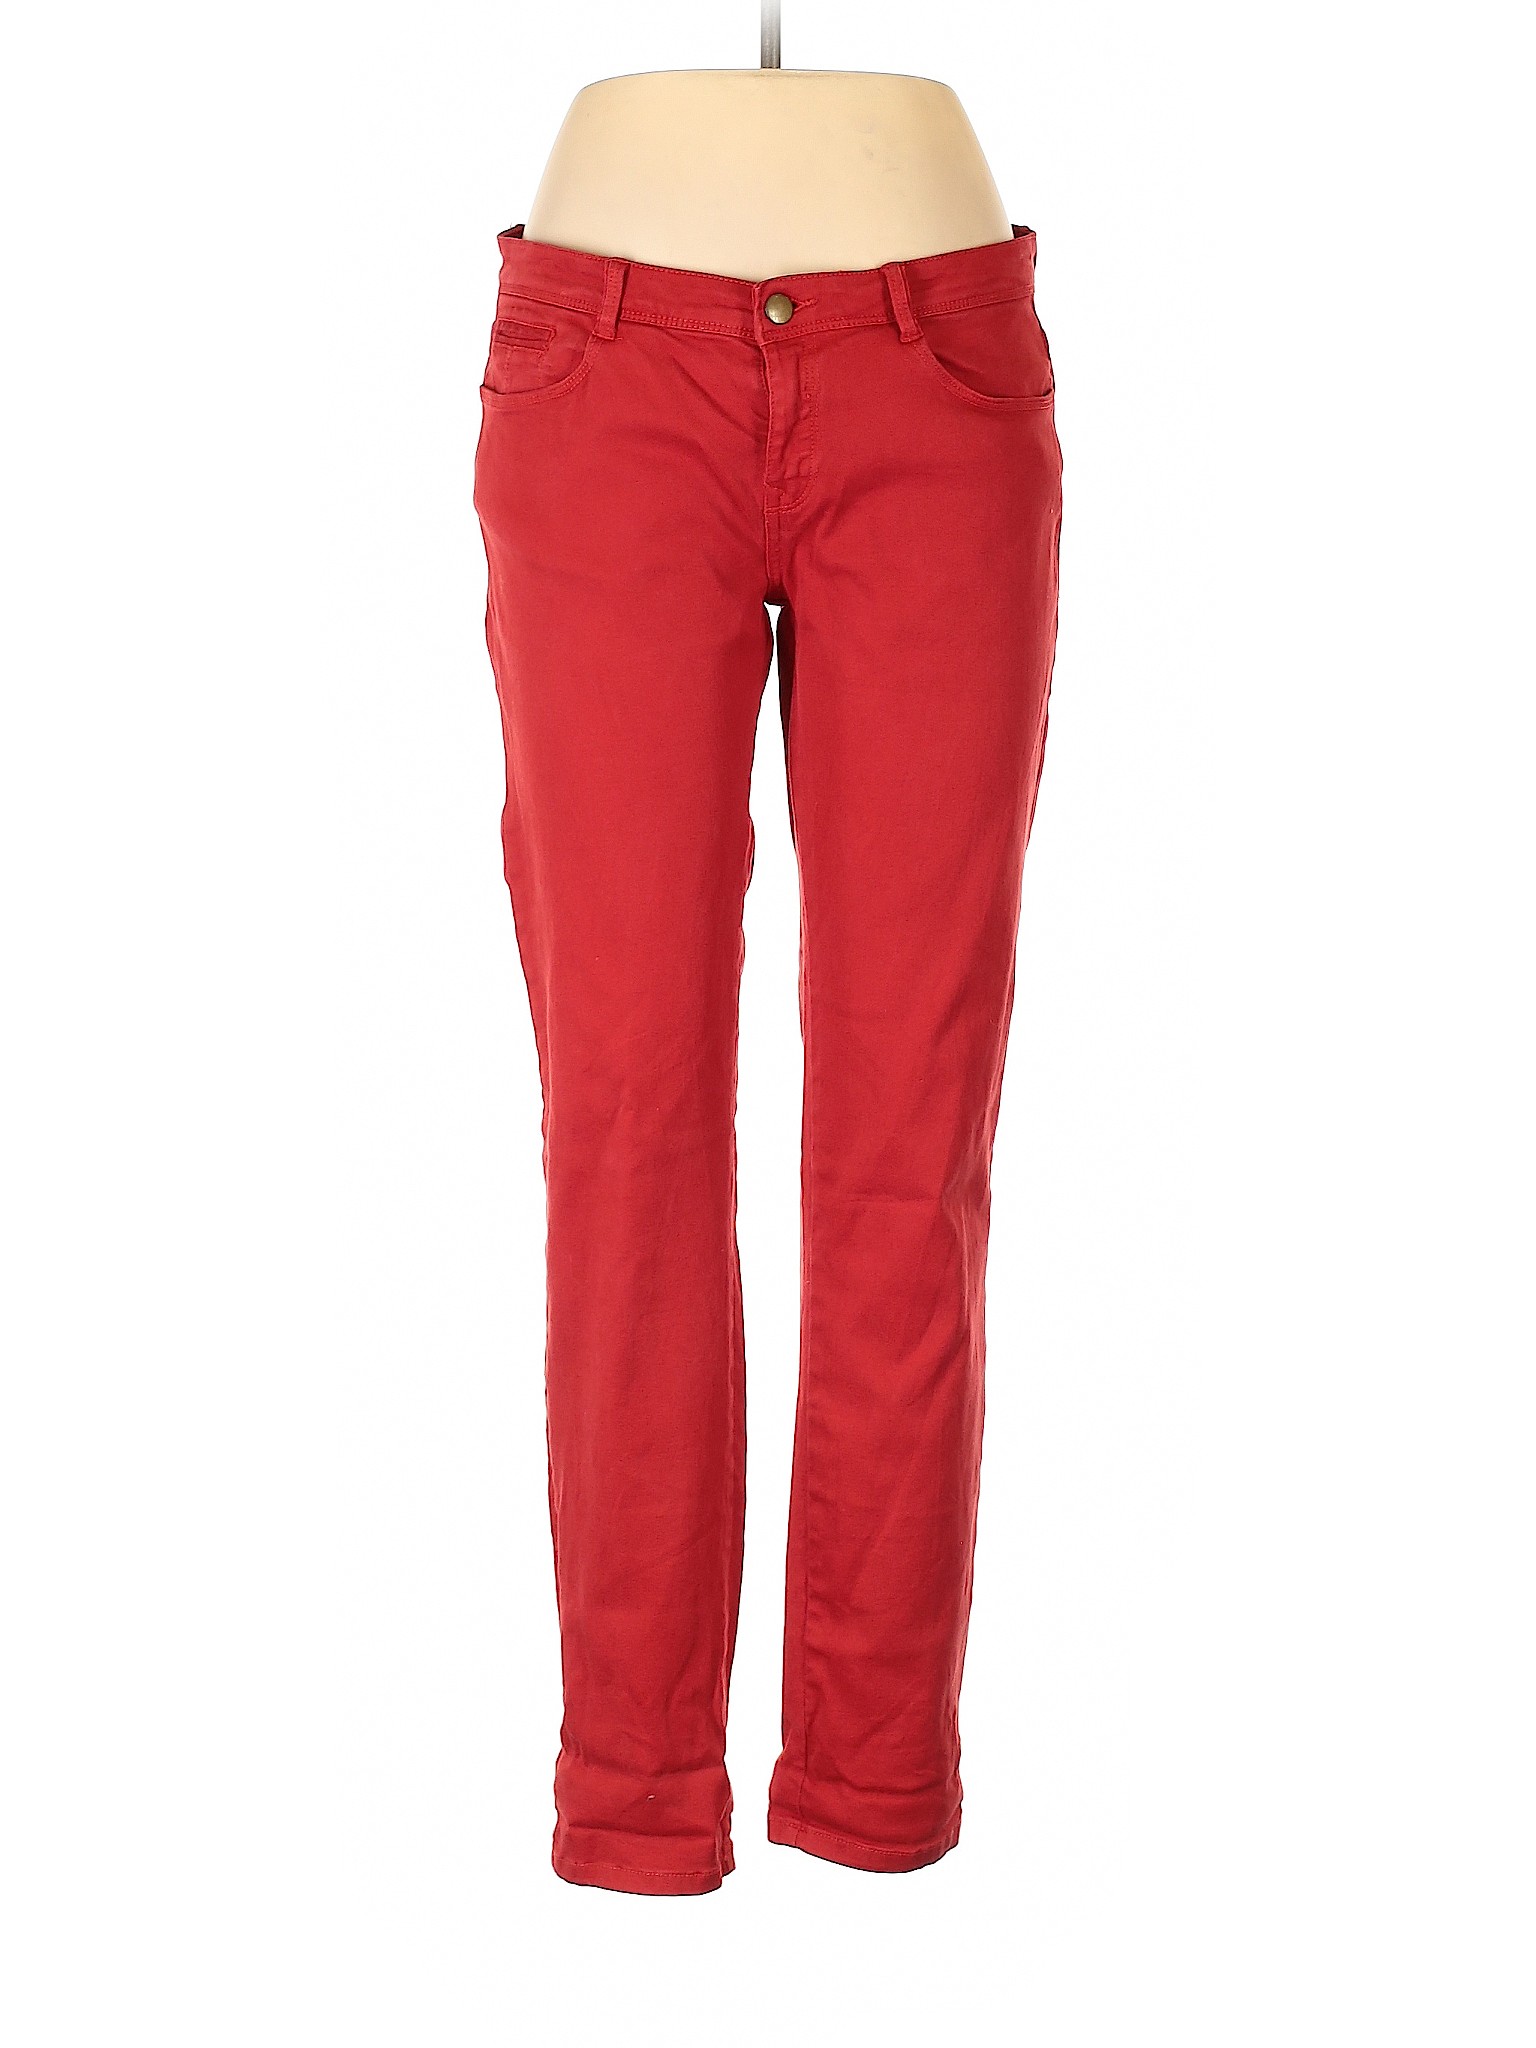 Forever 21 Women Red Jeans 30W | eBay